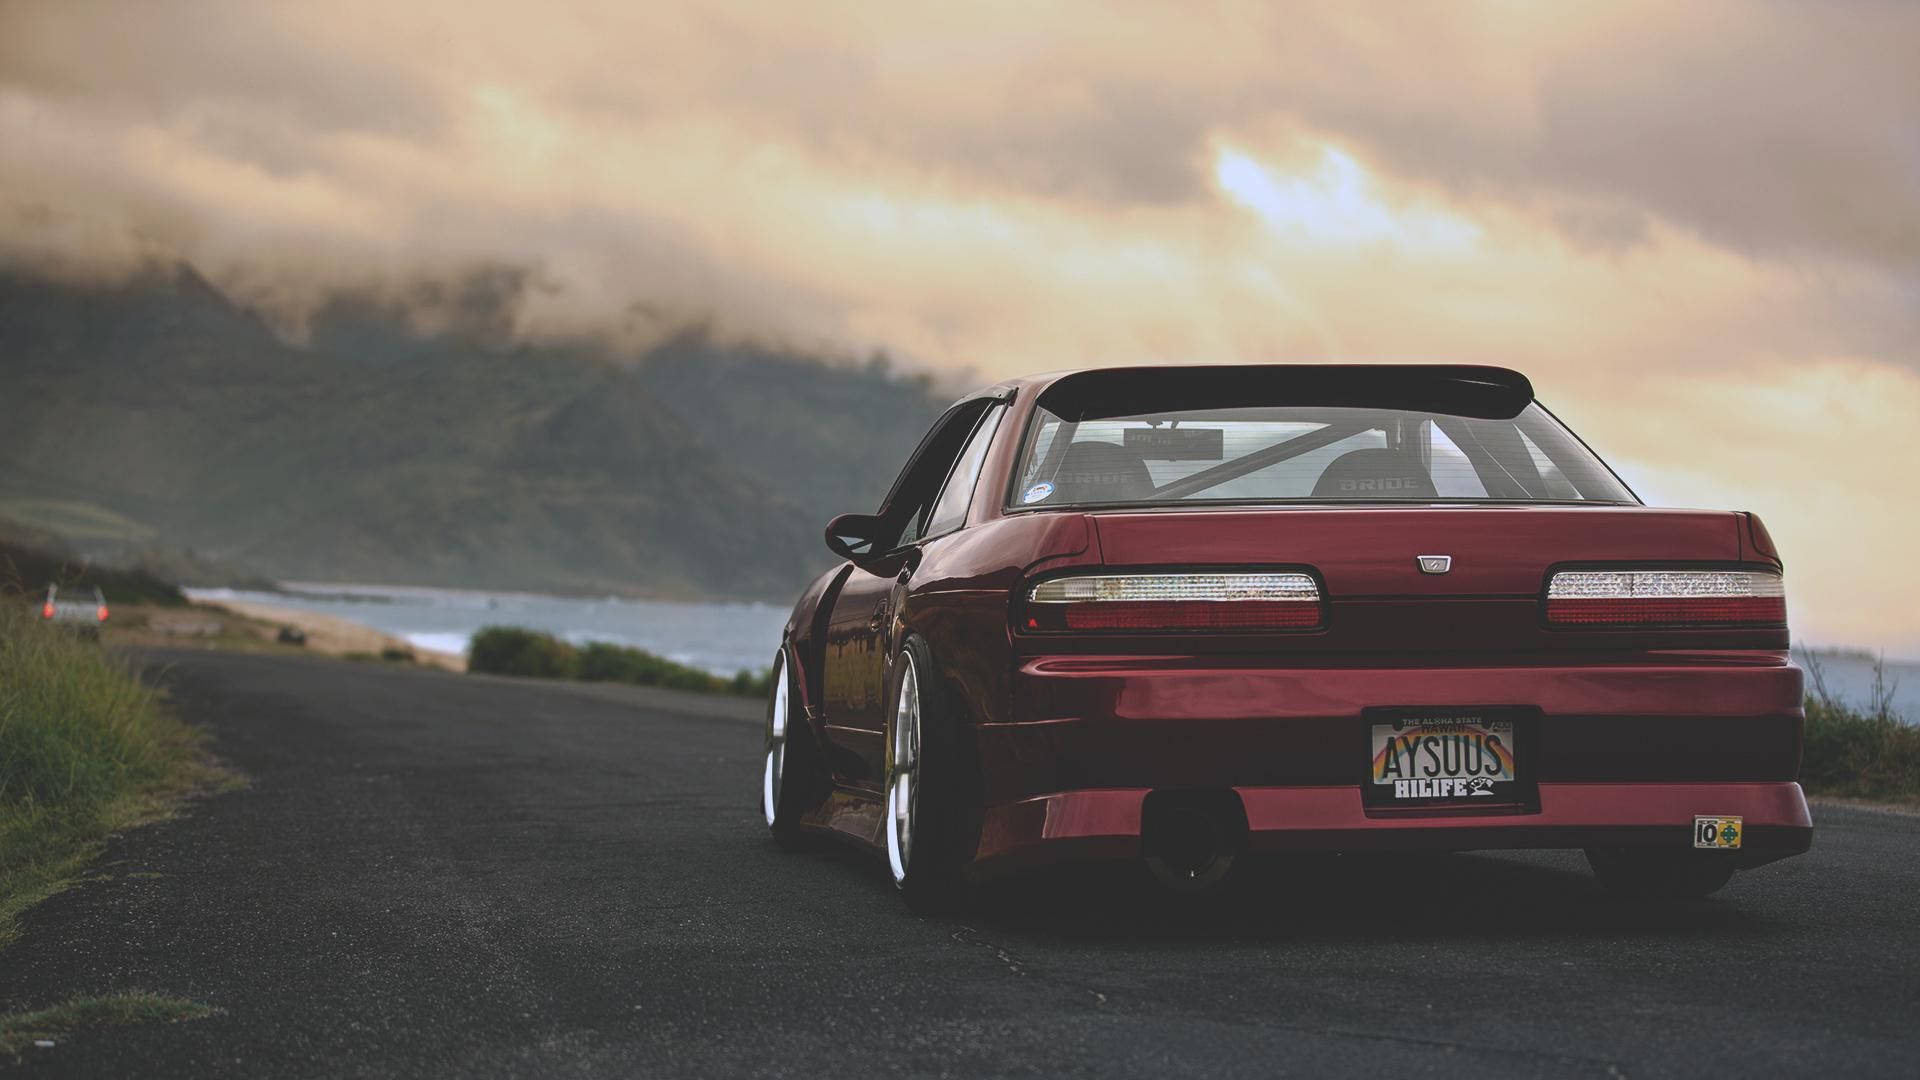 Red Jdm Nissan Silvia S14 Ocean Road Background